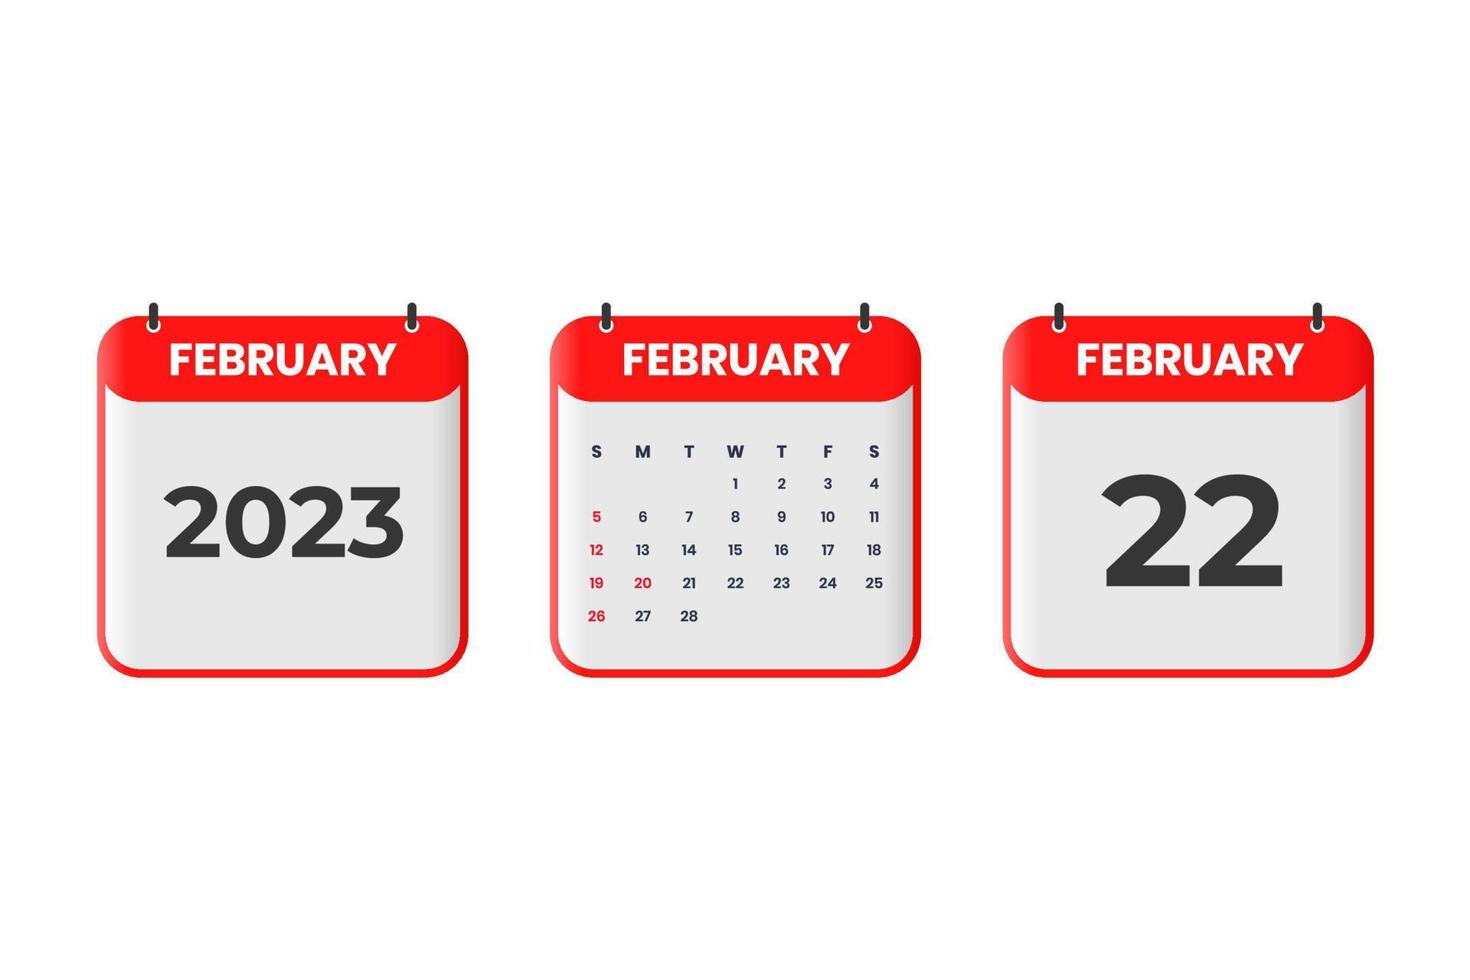 diseño de calendario de febrero de 2023. 22 de febrero de 2023 icono de calendario para horario, cita, concepto de fecha importante vector